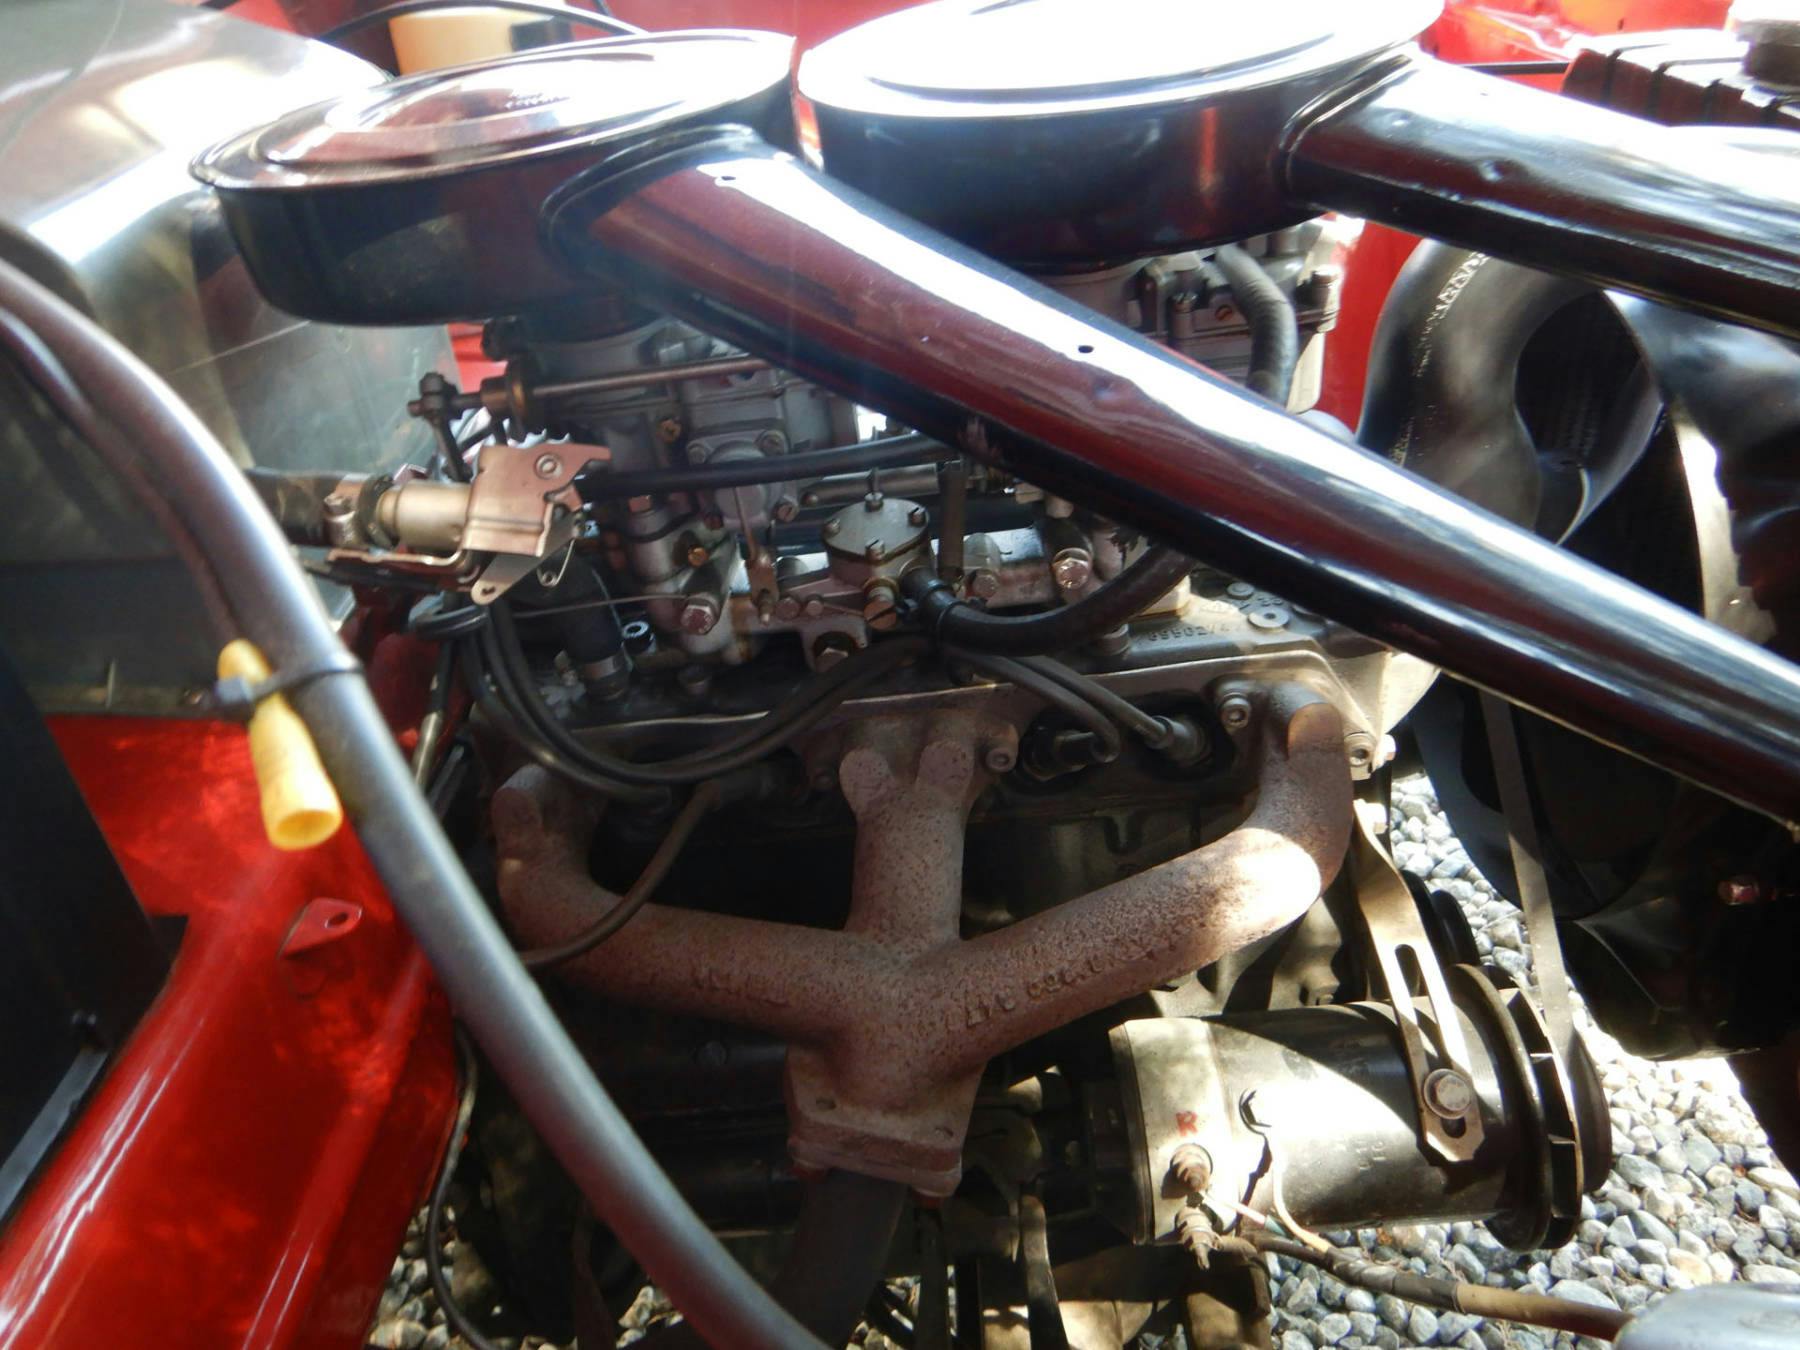 1968 Opel Kadett Deluxe Wagon engine closeup